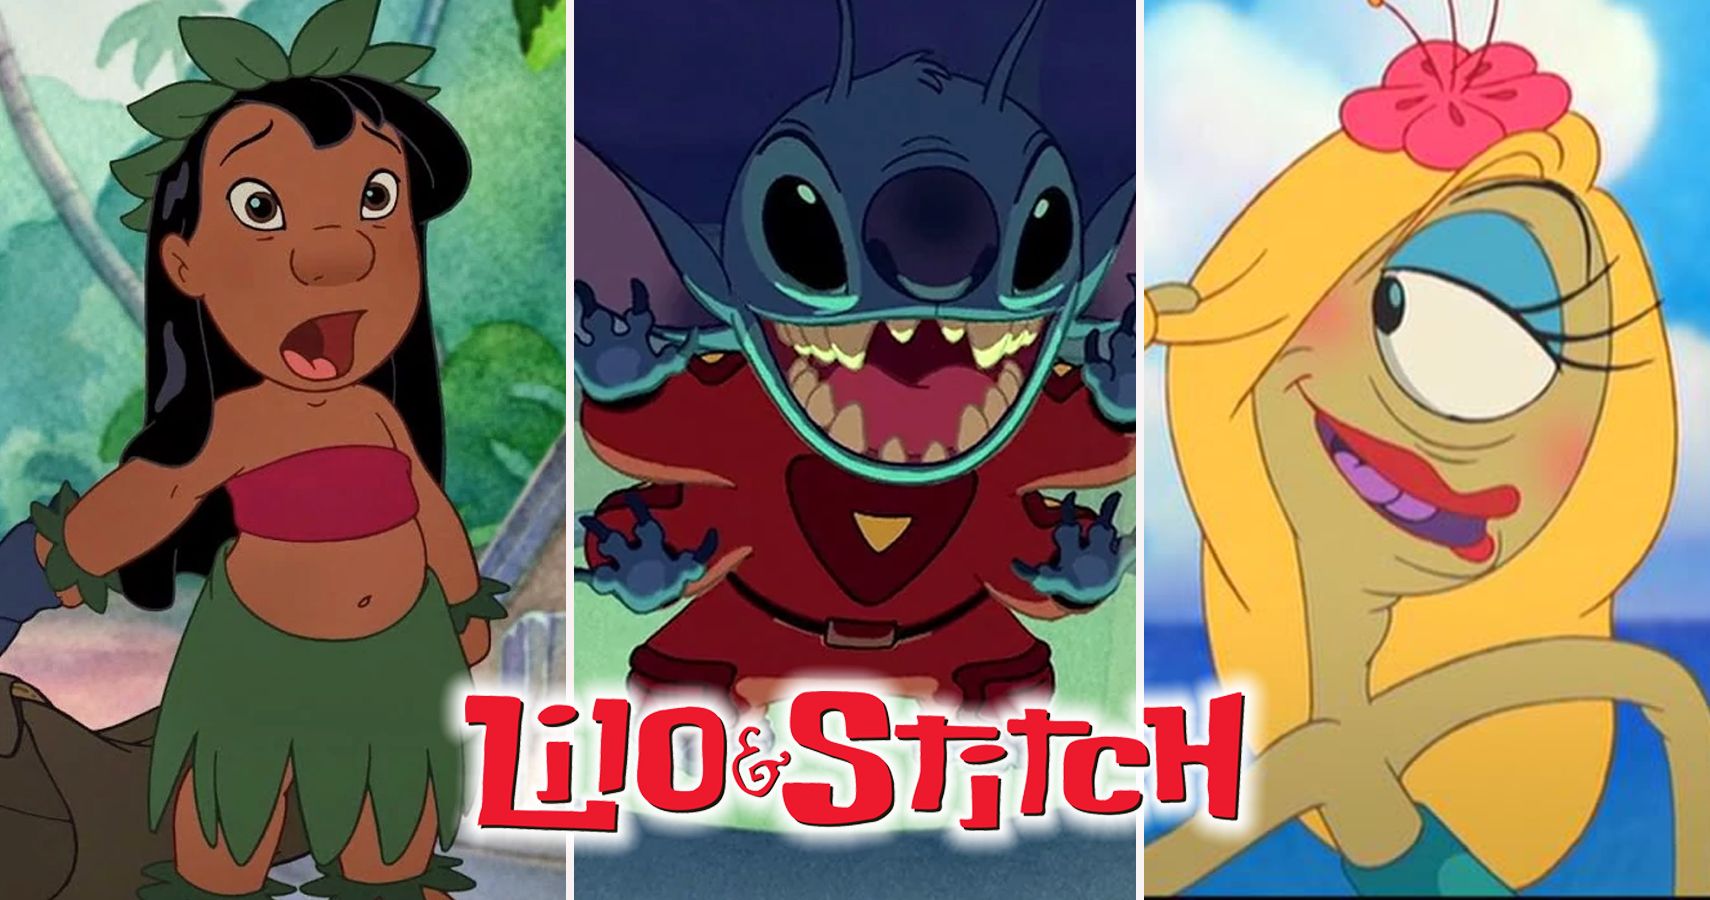 Disney Lilo and Stitch - Sitting Wall Poster, 22.375 x 34 